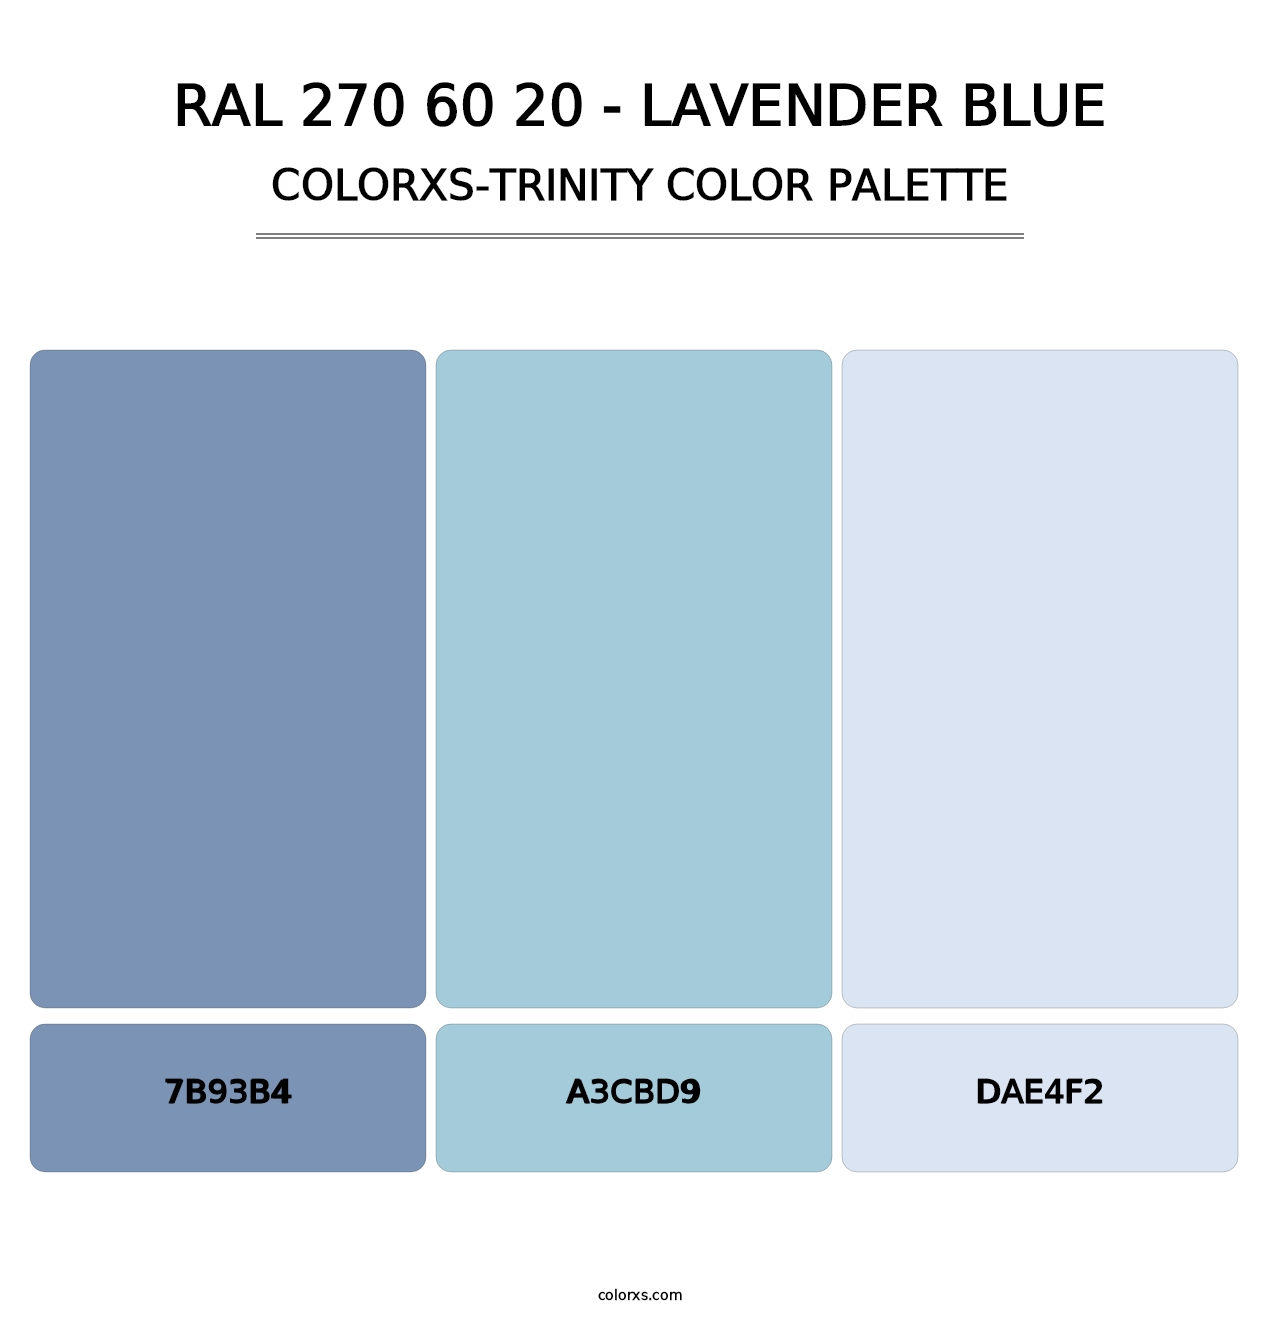 RAL 270 60 20 - Lavender Blue - Colorxs Trinity Palette